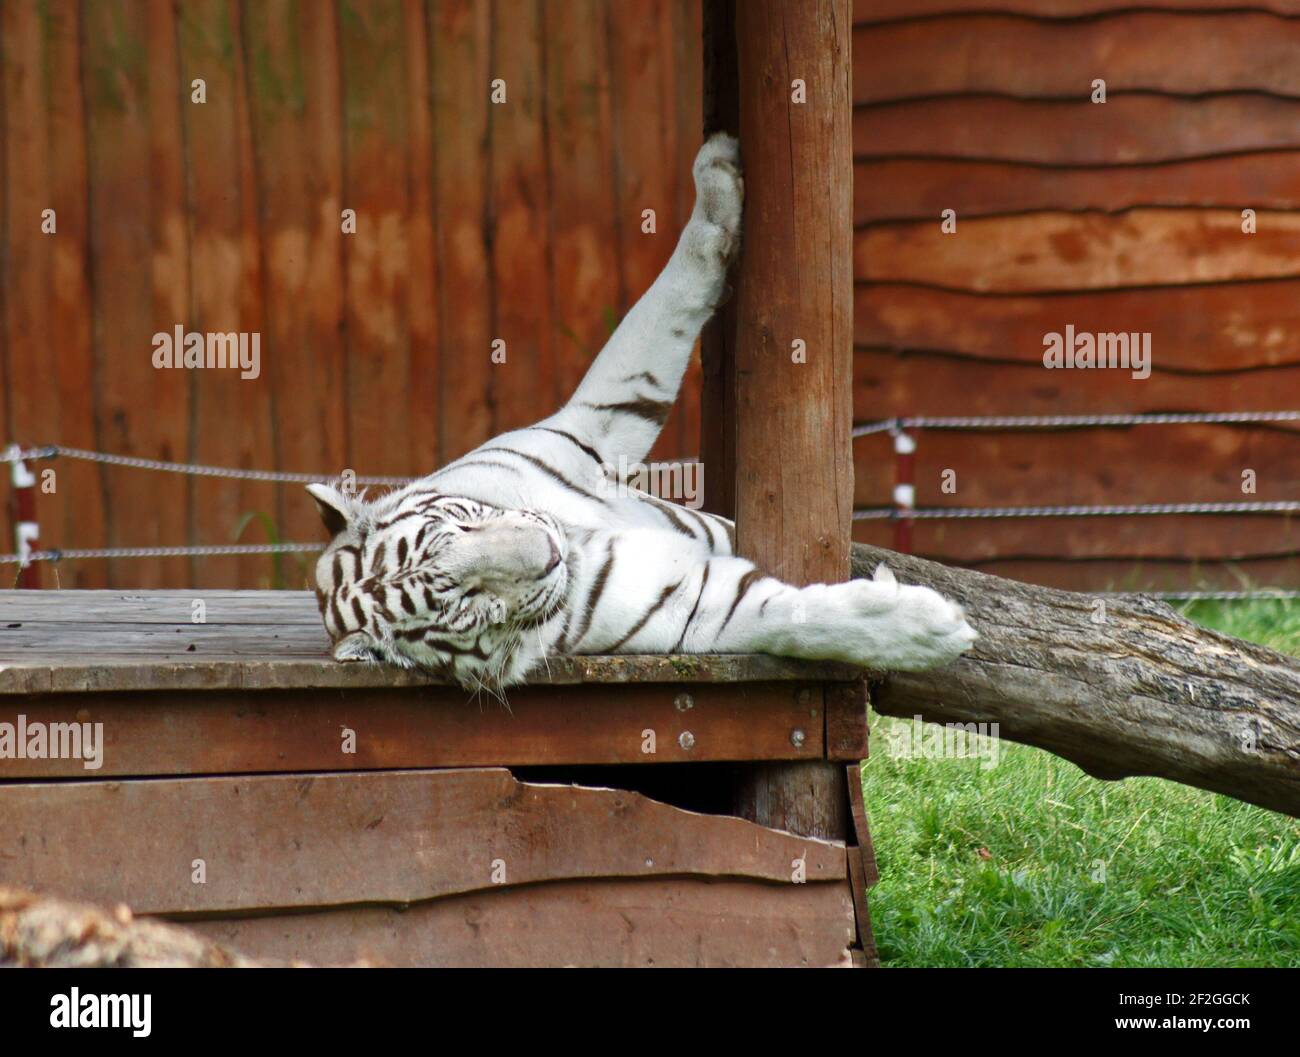 Sleeping white tiger in animal sactuary Stock Photo